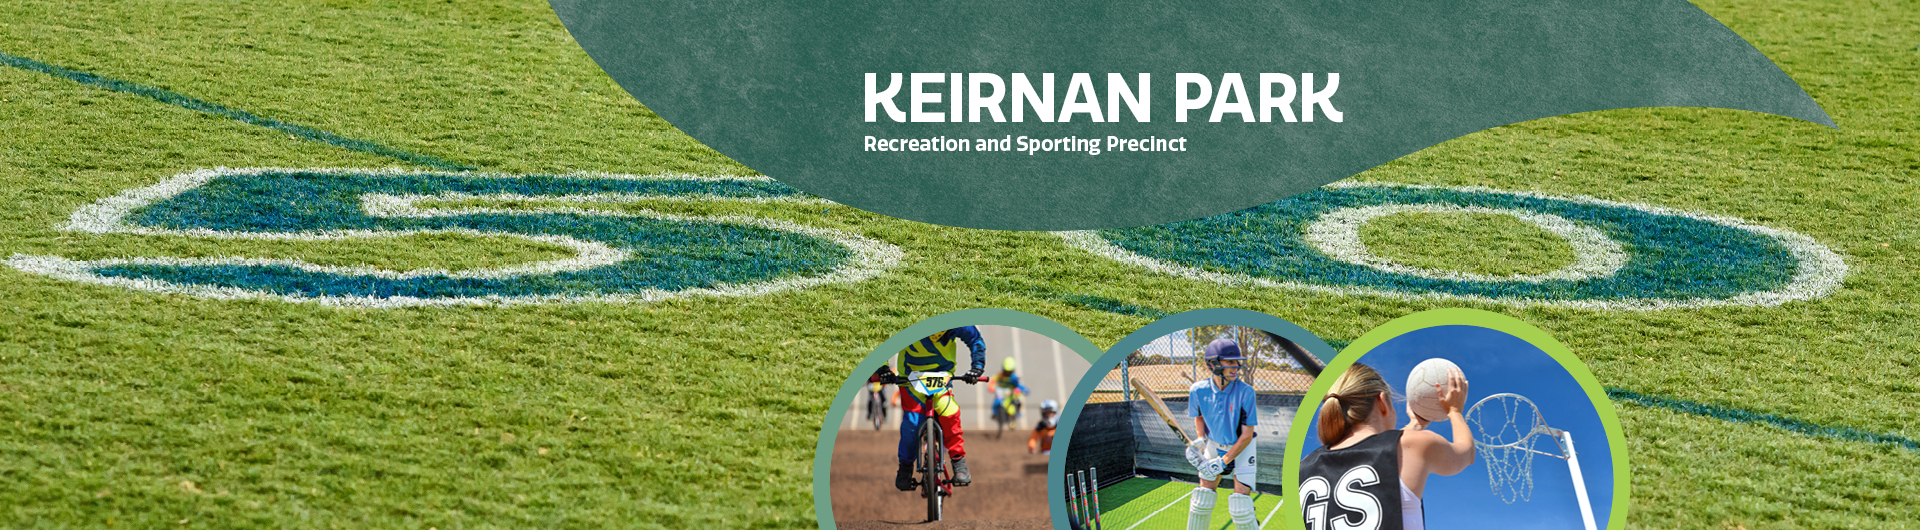 Keirnan Park Recreation and Sporting Precinct